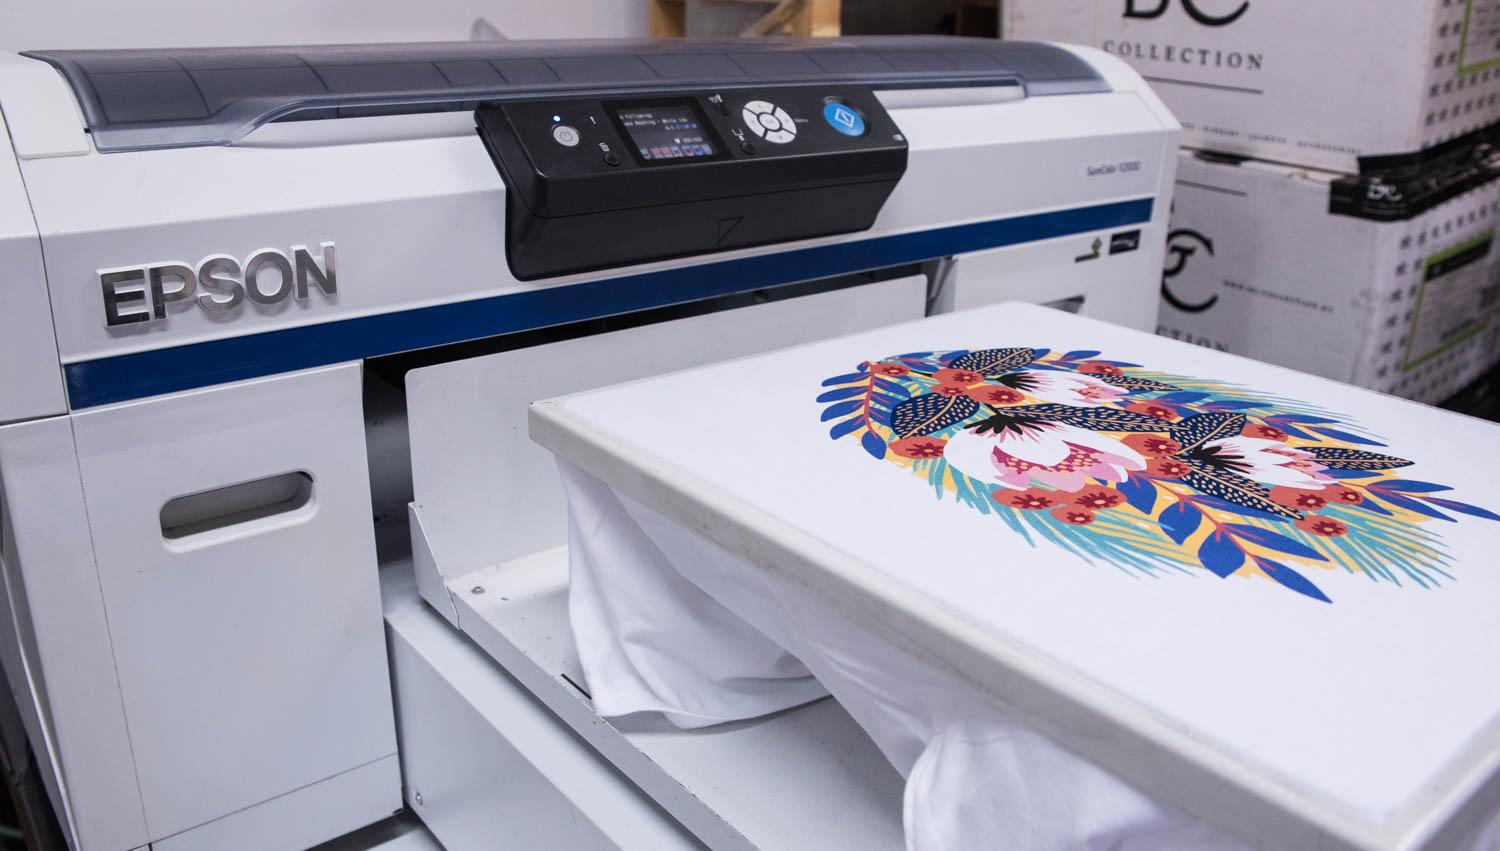 Withered Kompatibel med hellige T-shirt and sweatshirt printing, digital printing - Printing Season